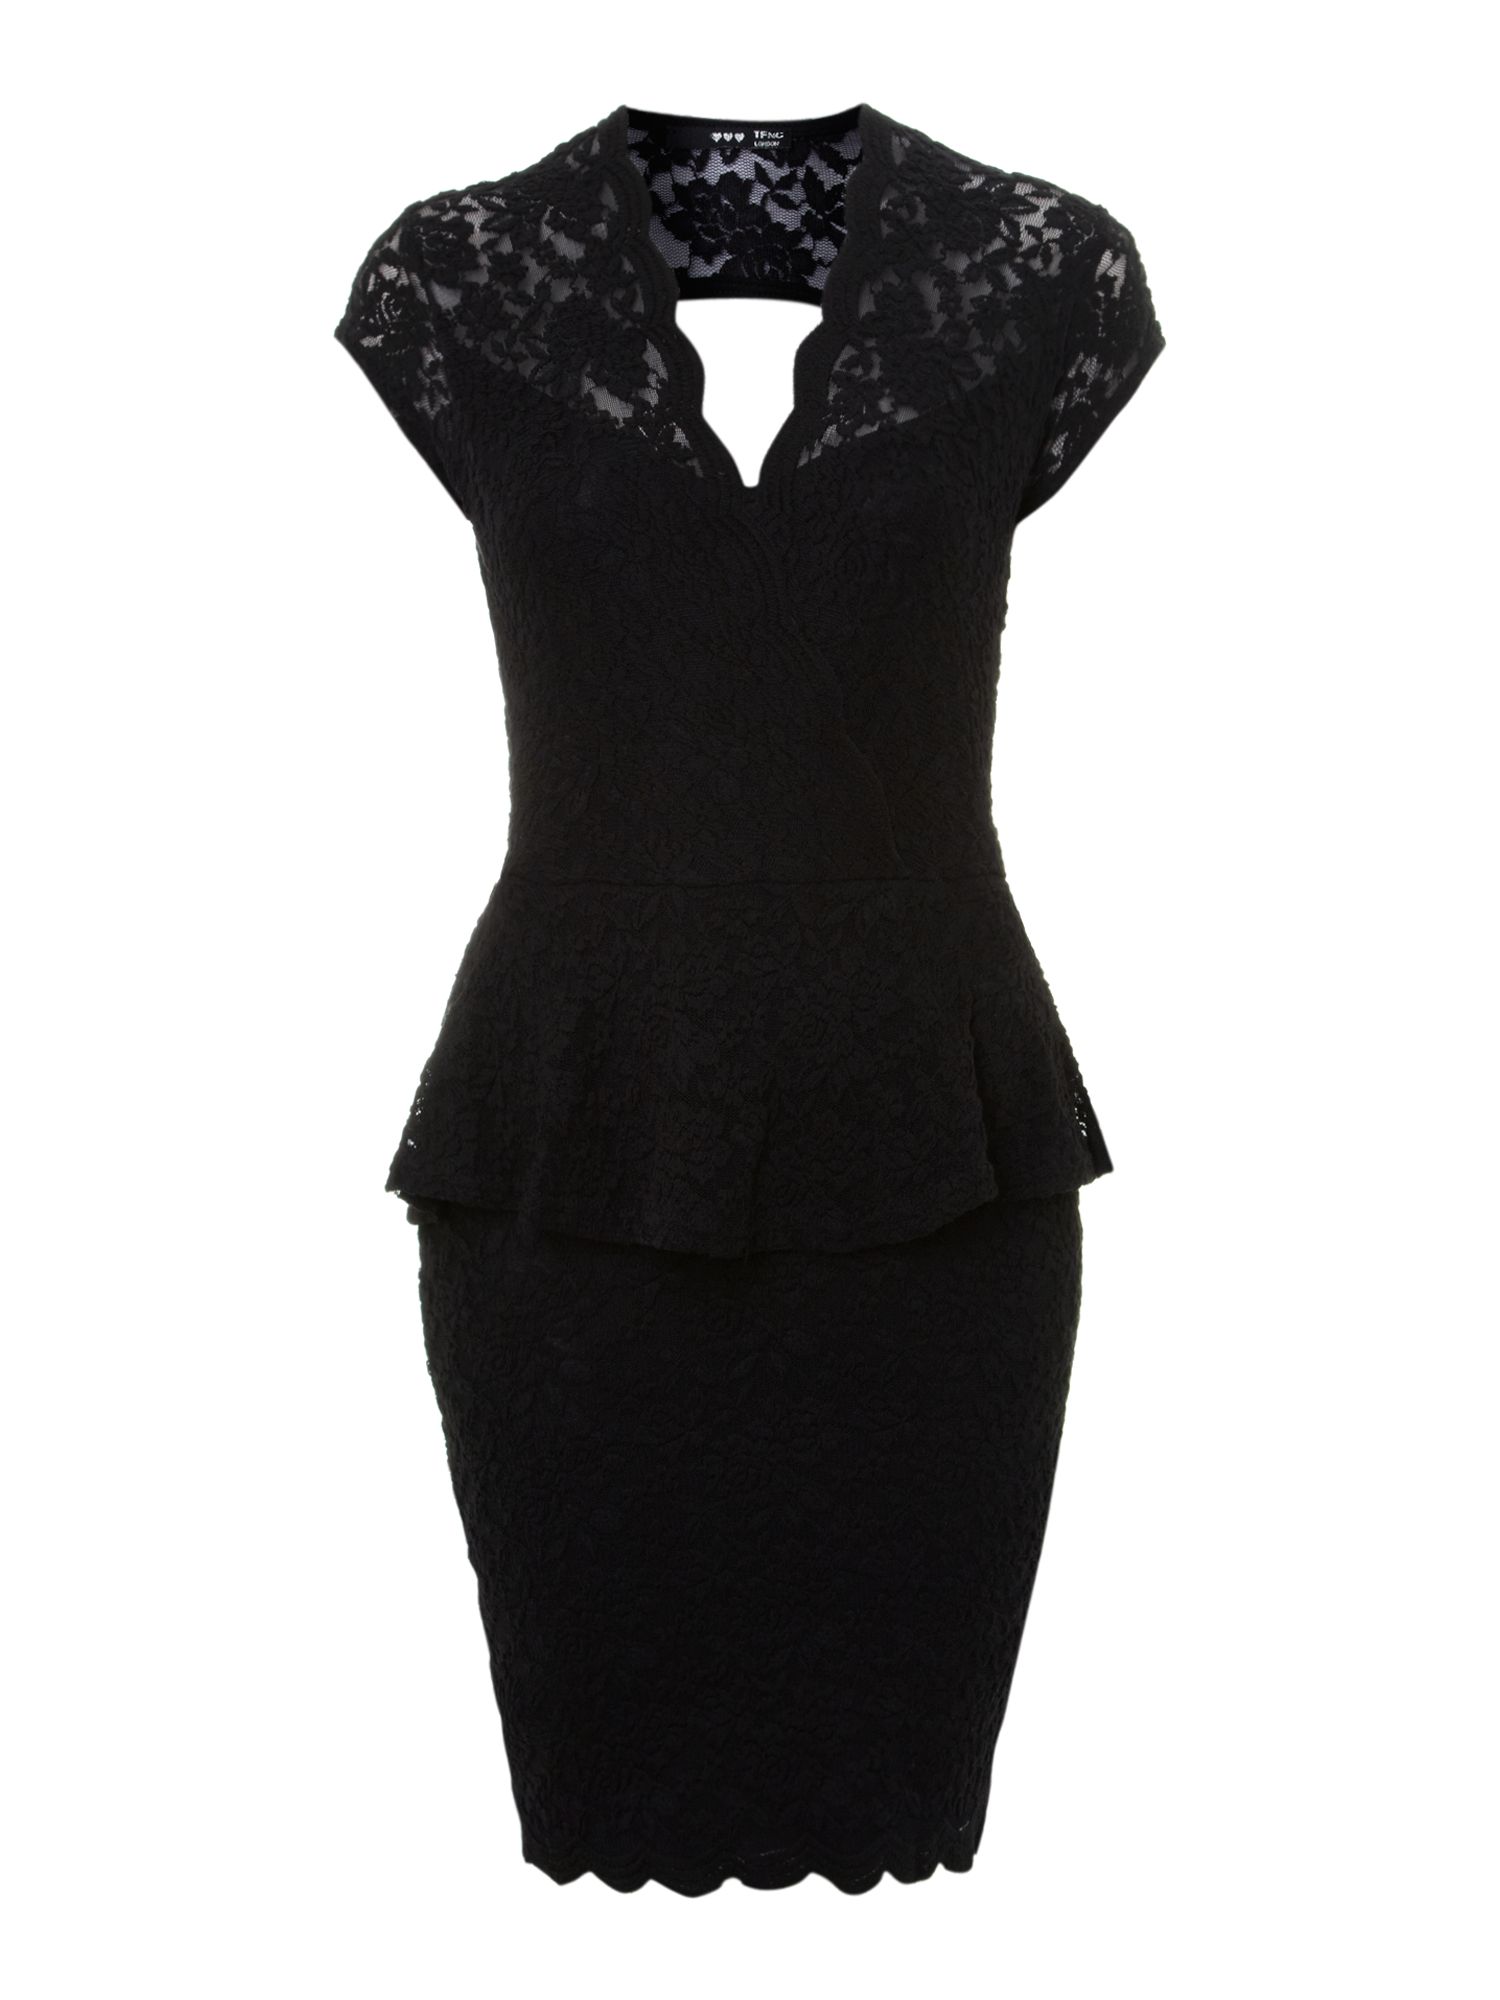 Tfnc london Peplum Top Lace Dress in Black | Lyst